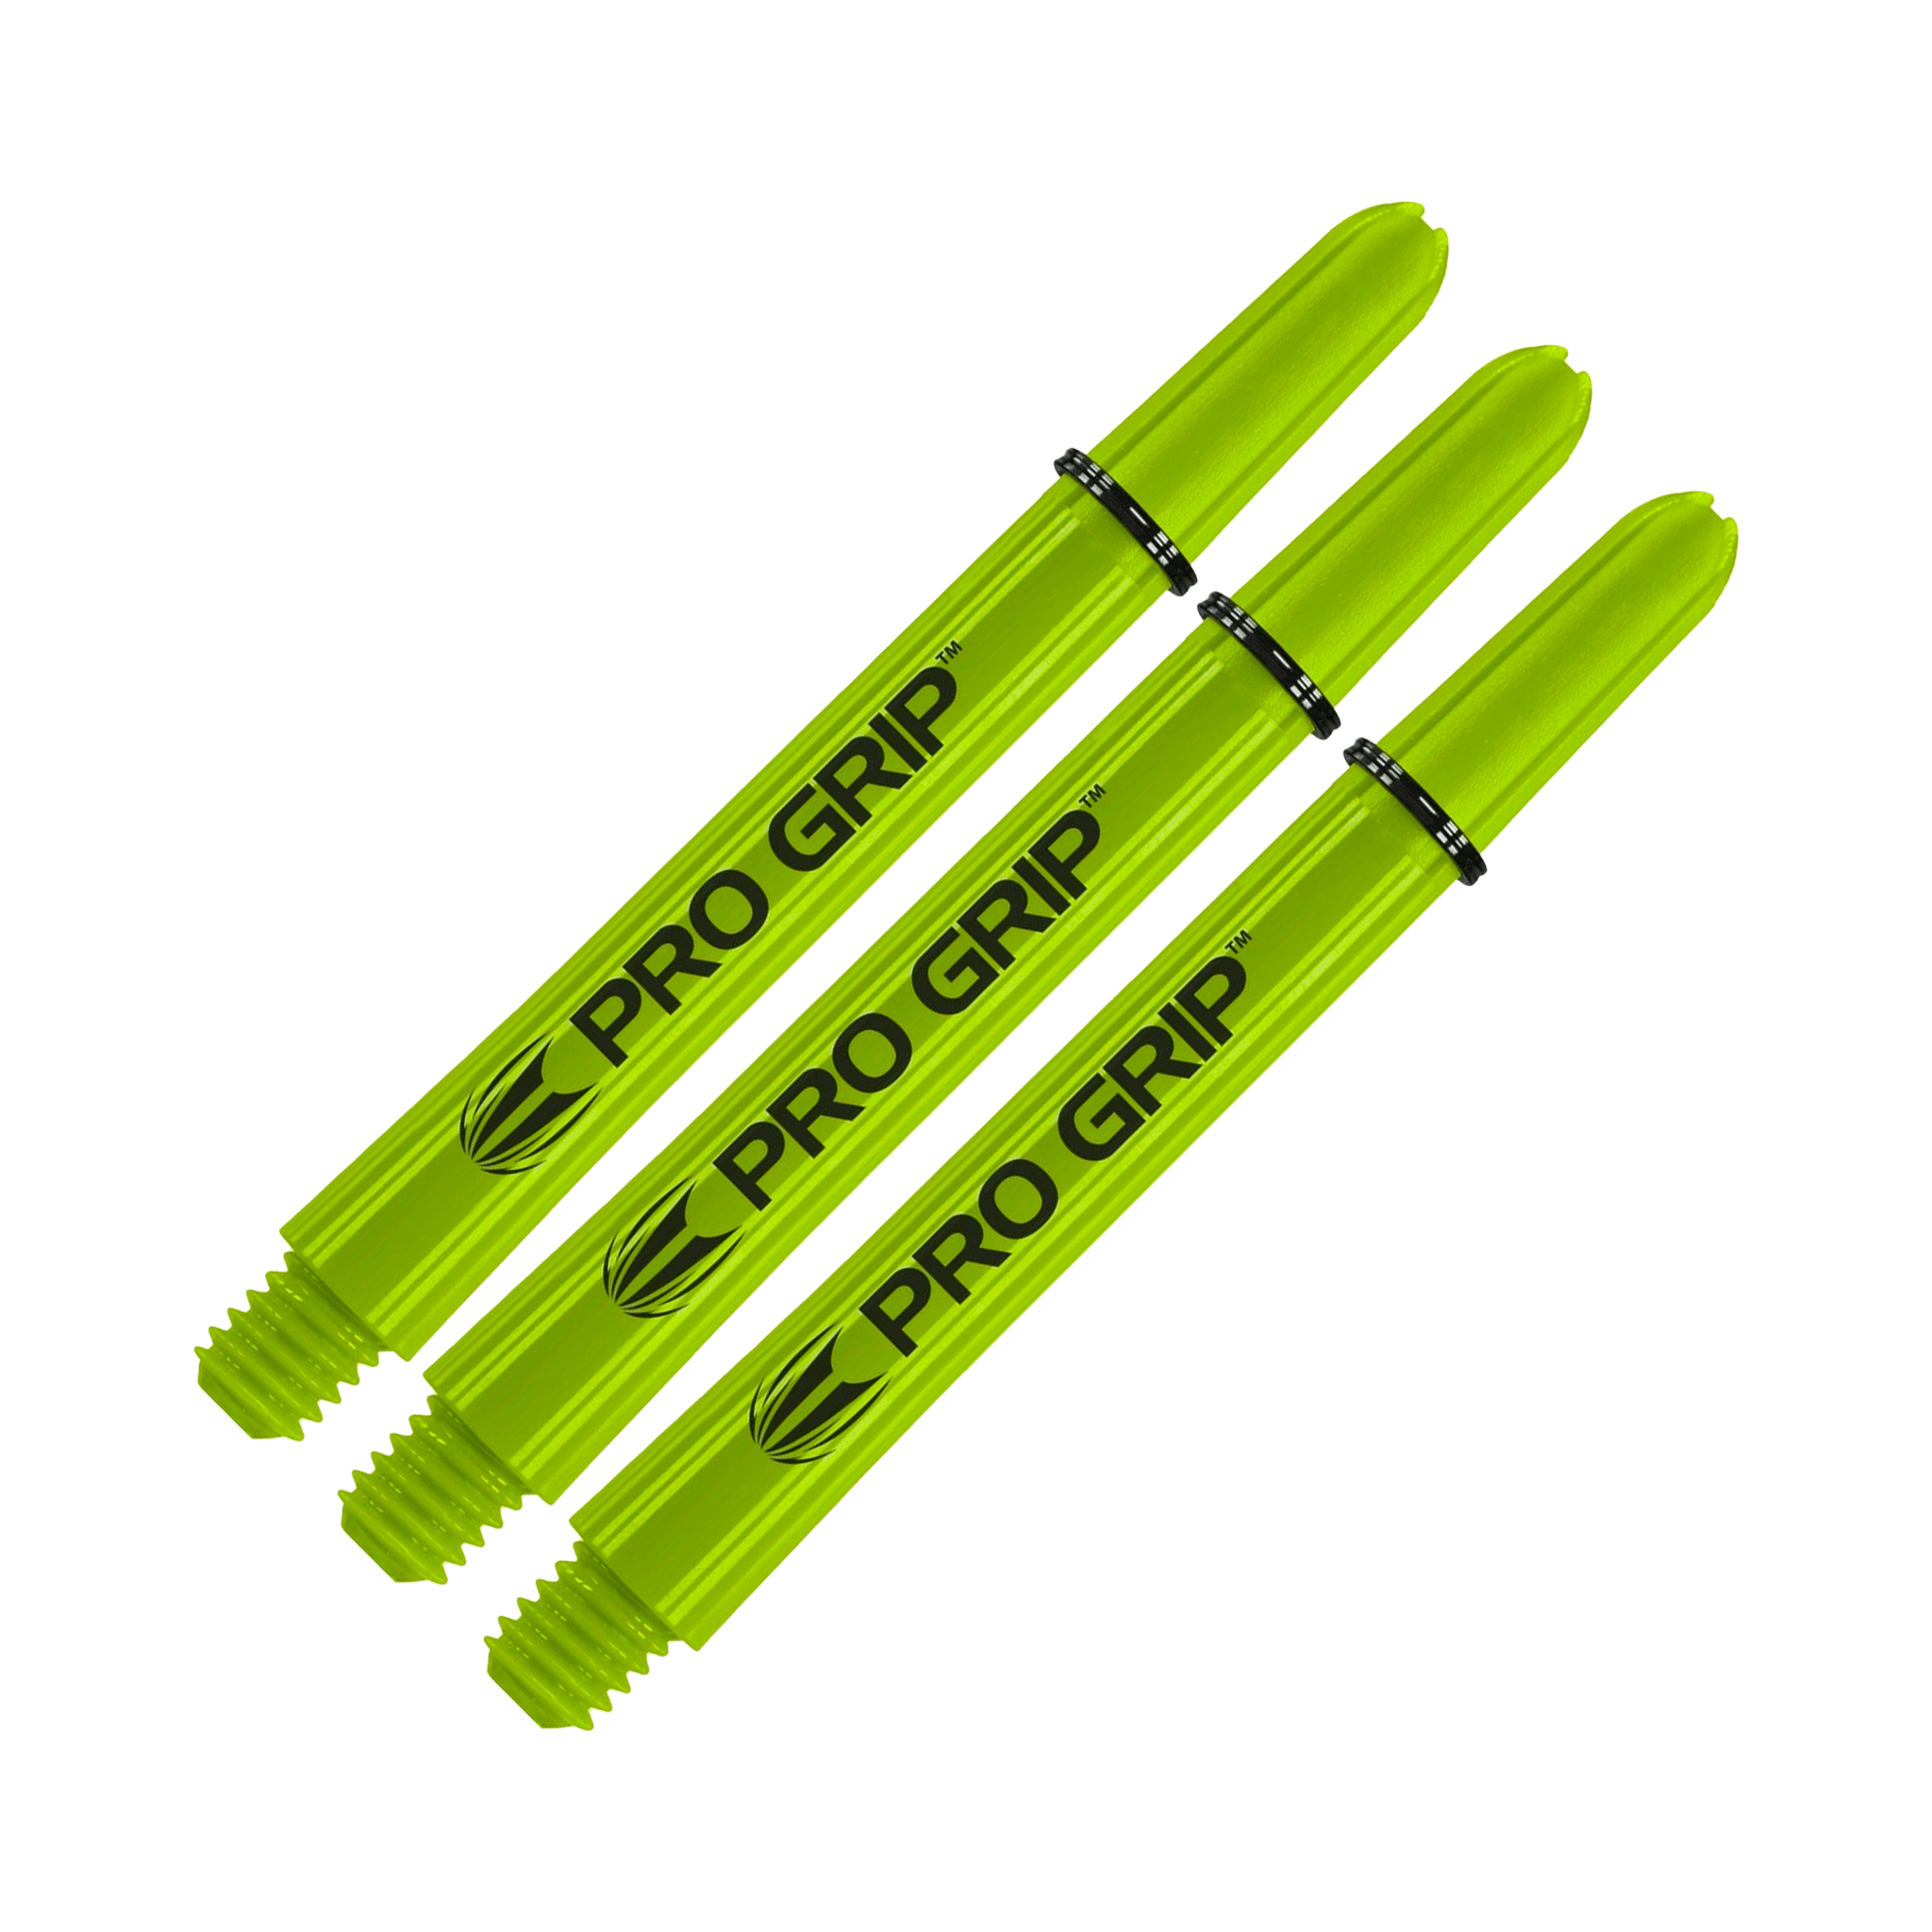 Target Pro Grip - Nylon Dart Shafts Lime / Medium (48mm) Shafts